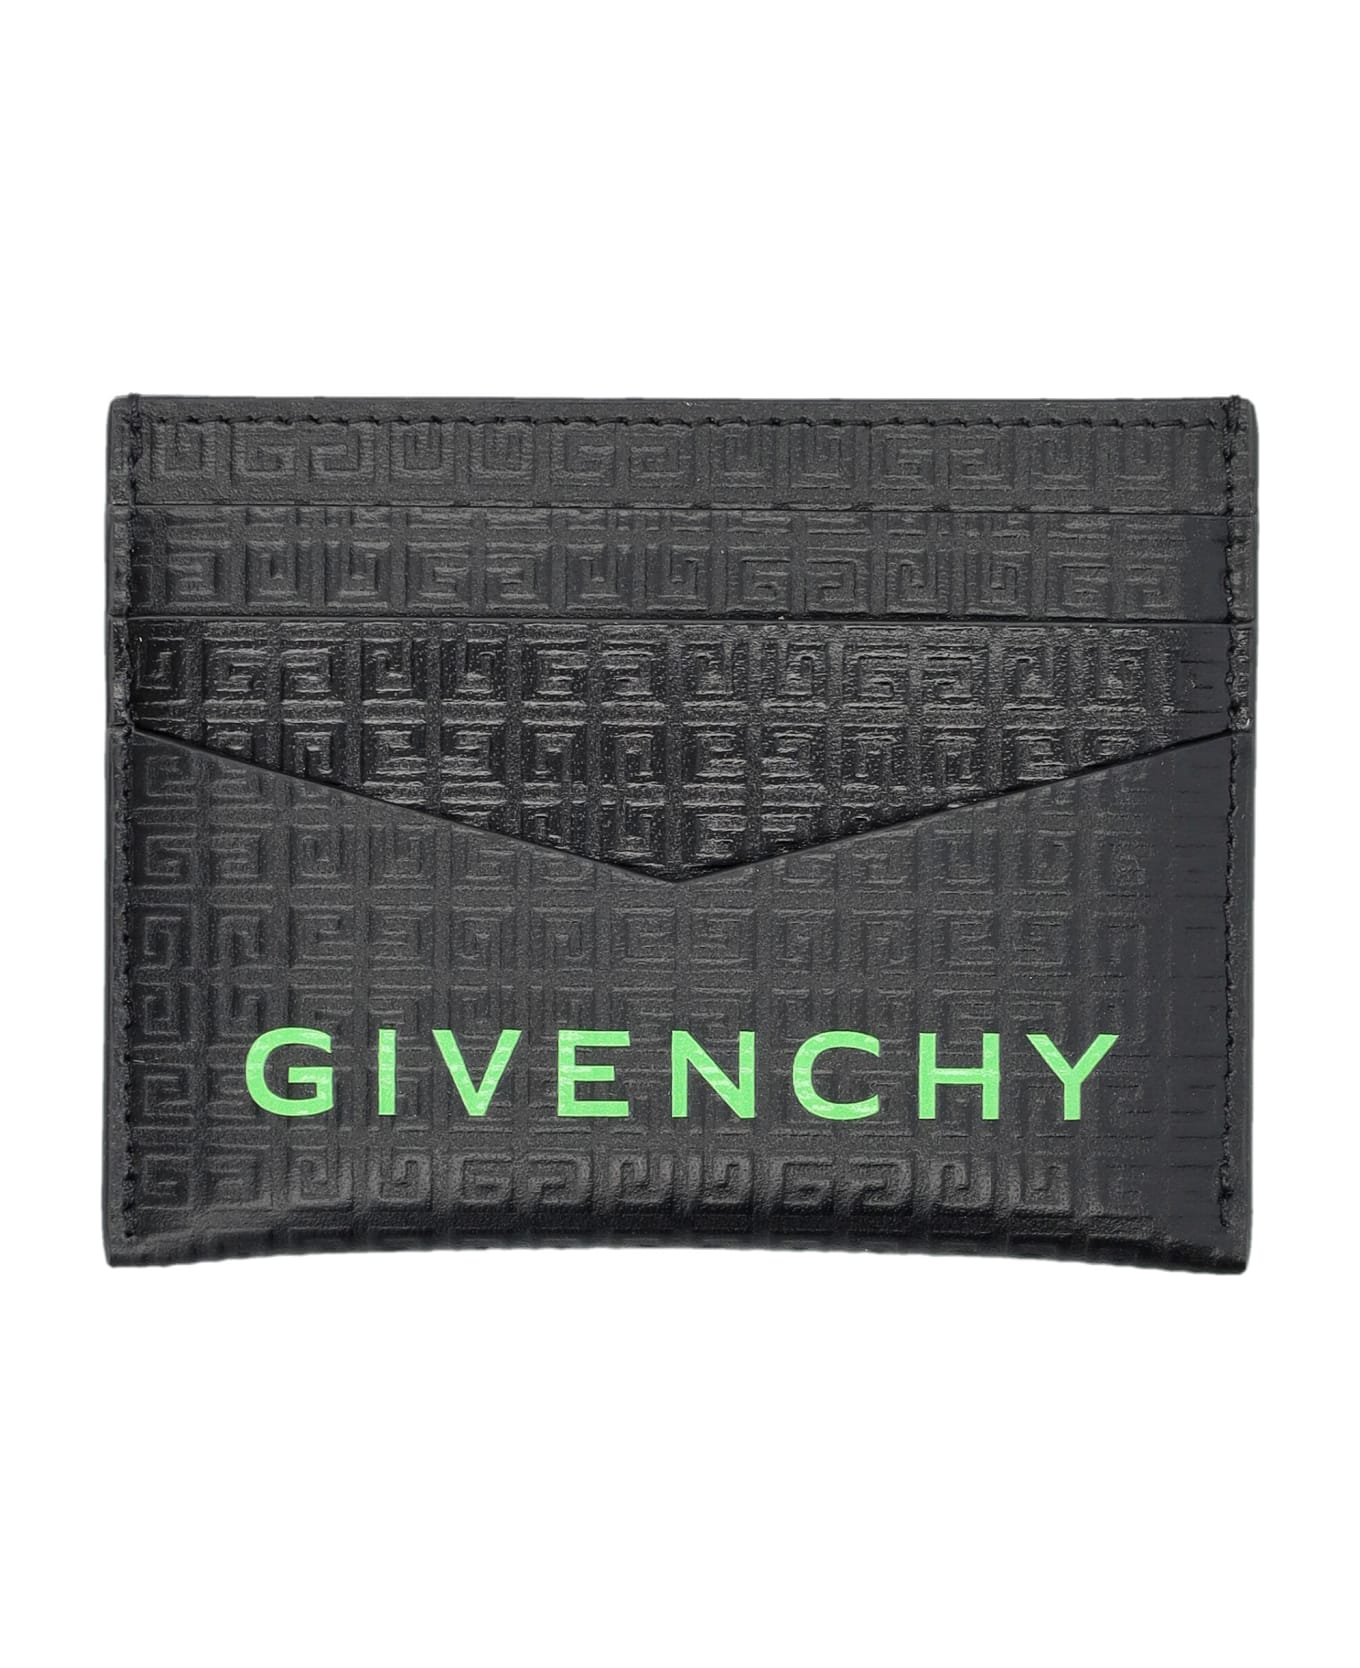 Givenchy Card Holder 2x3 Cc - BLACK/GREEN